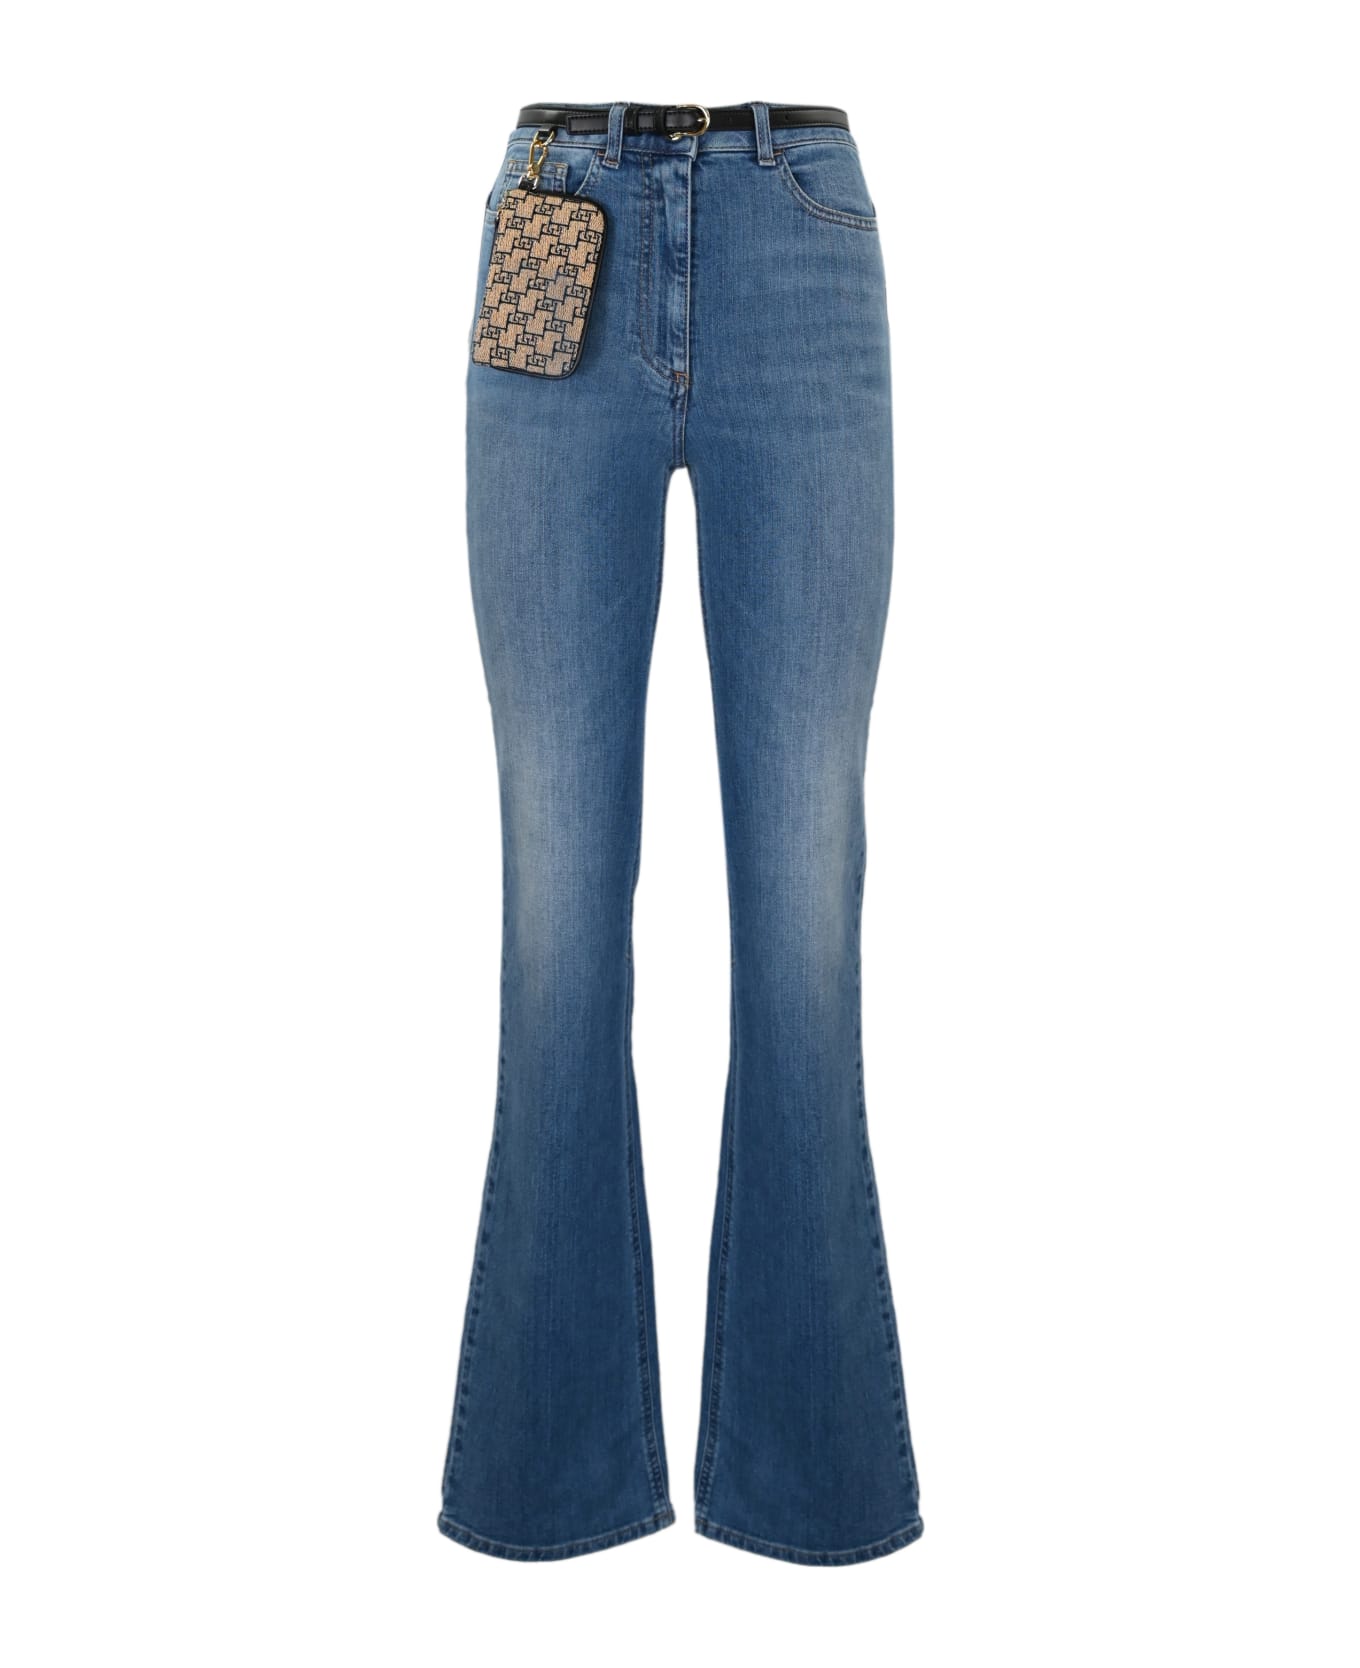 Elisabetta Franchi Flared Jeans With Belt And Clutch Bag - Light blue